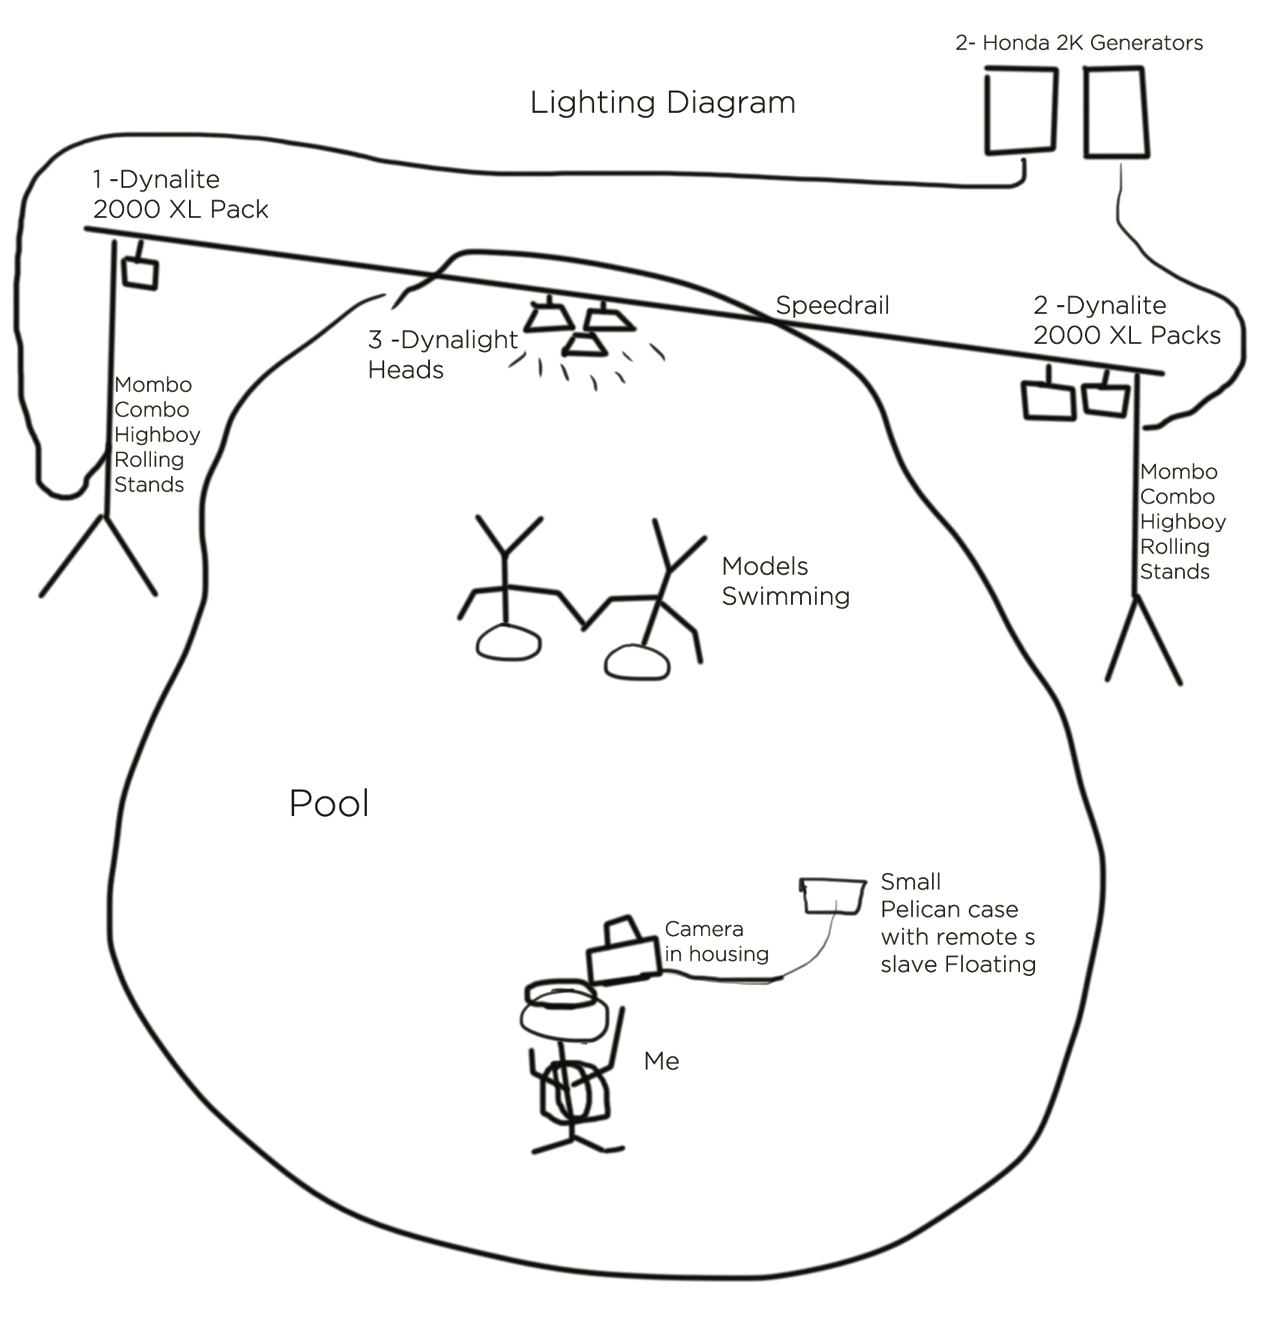 Lighting Diagram